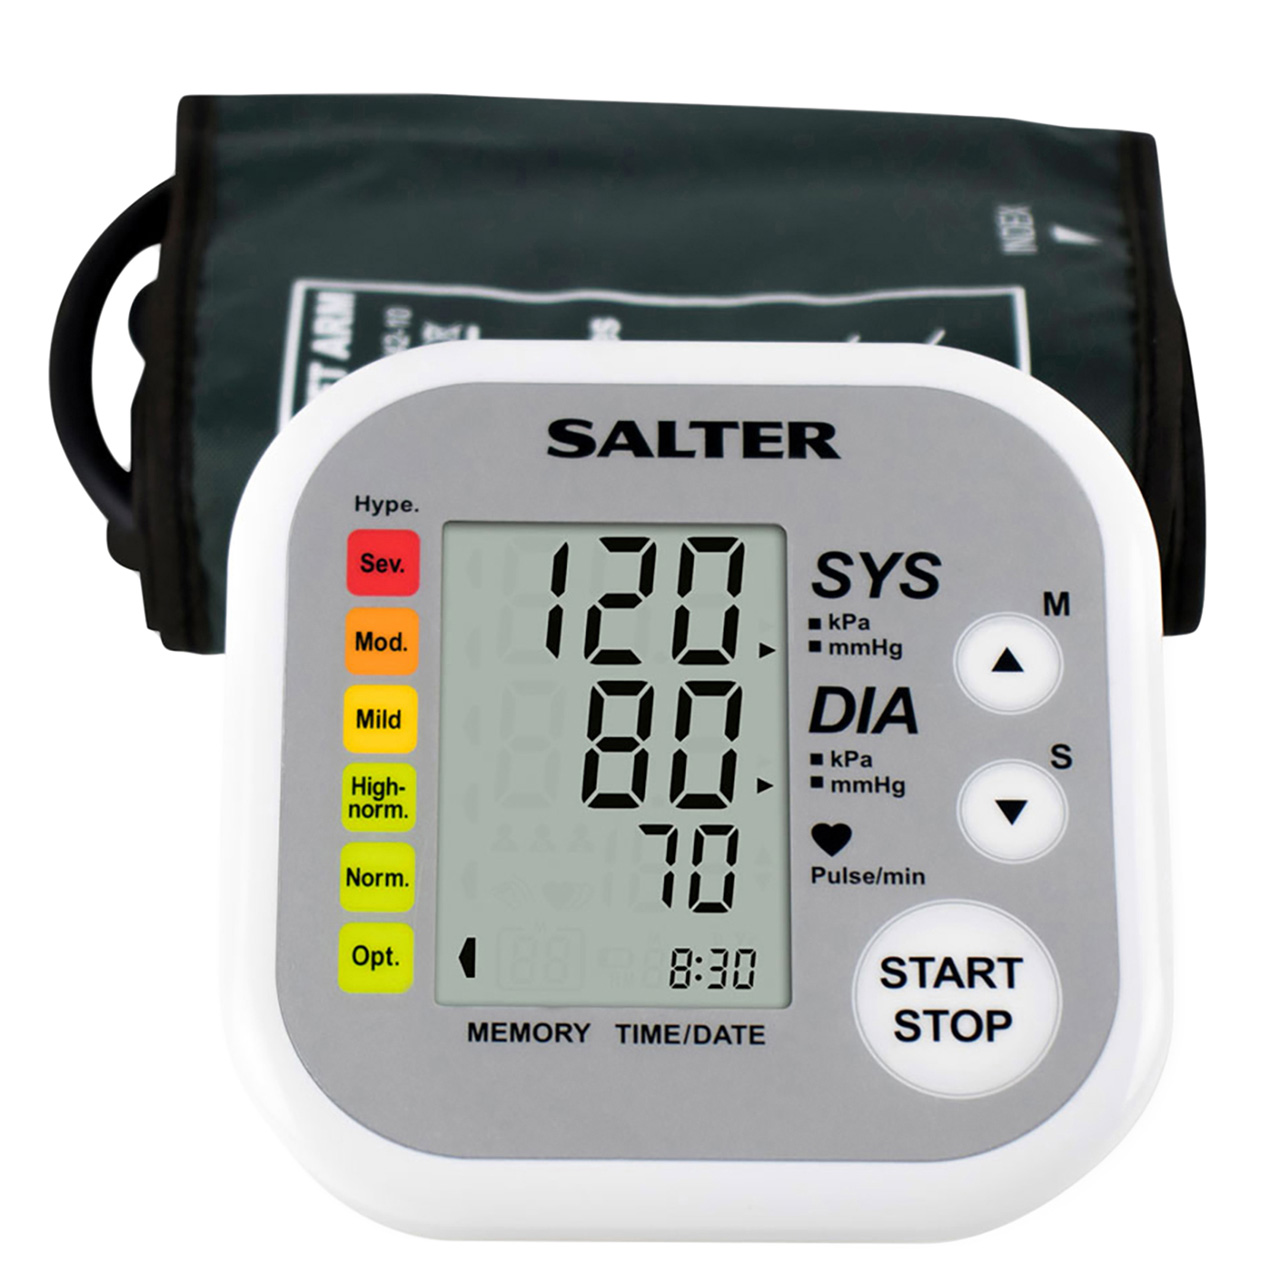 Salter Blood Pressure monitor